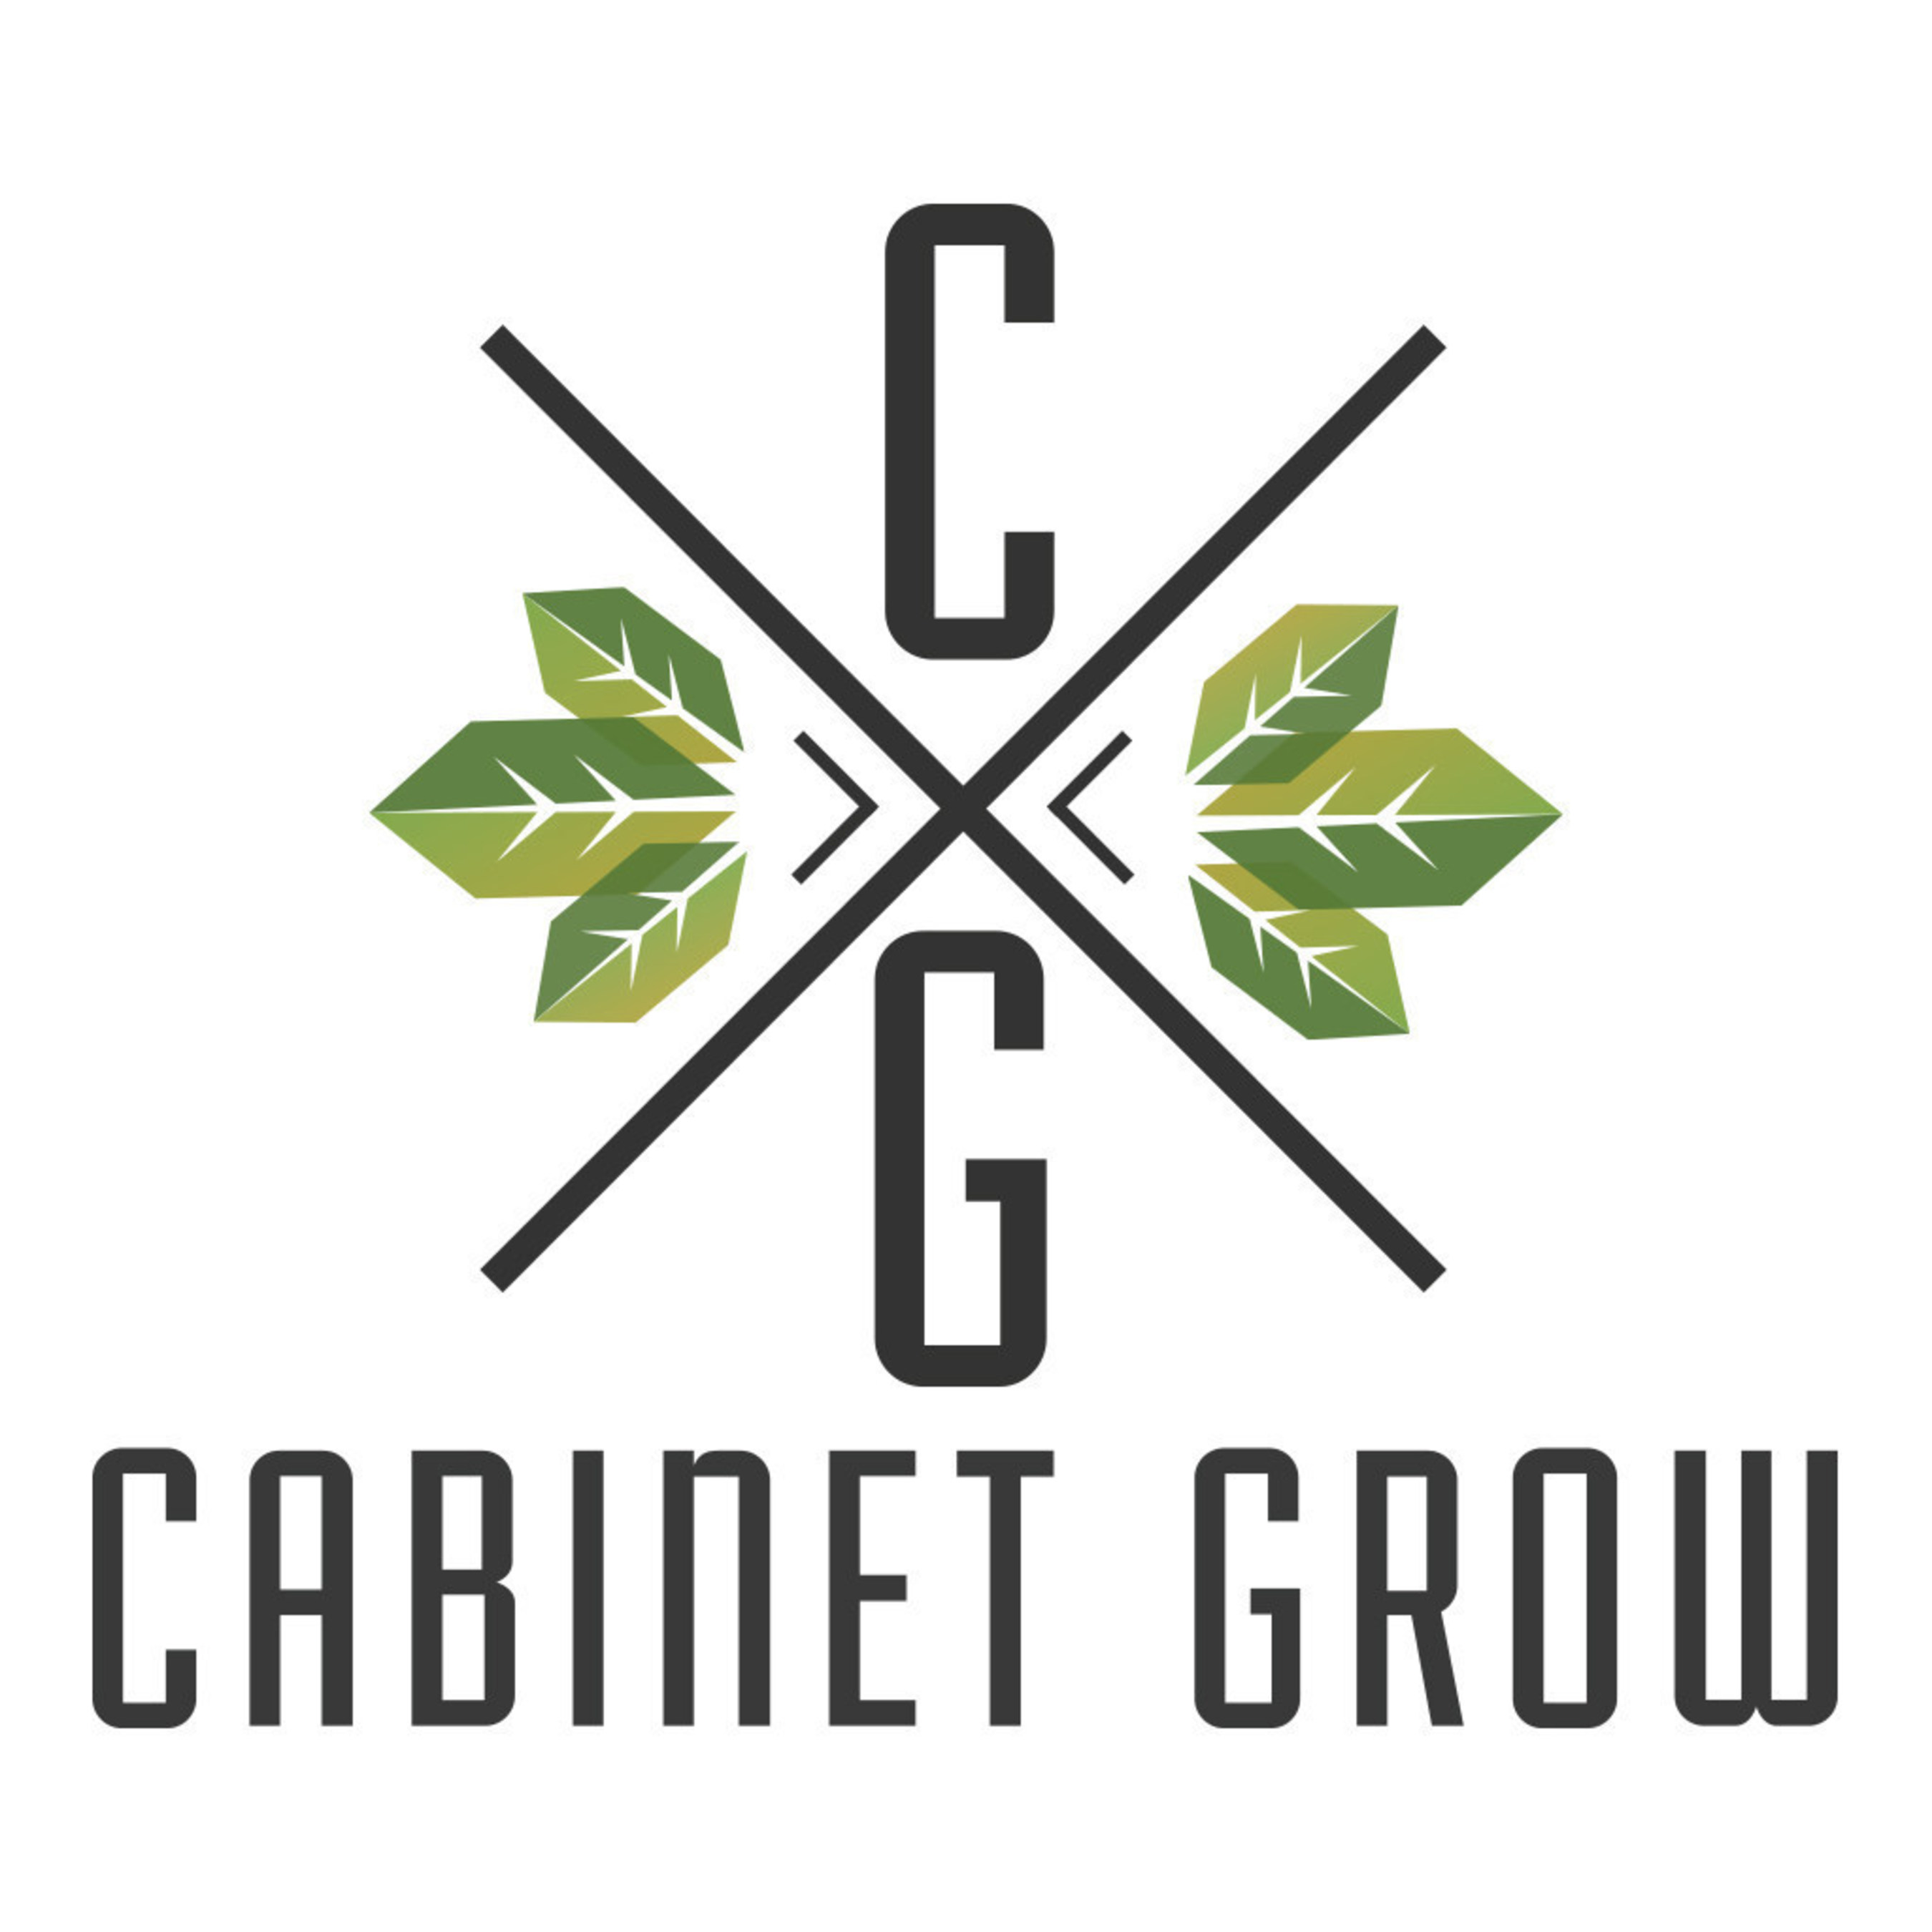 Cabinet Grow